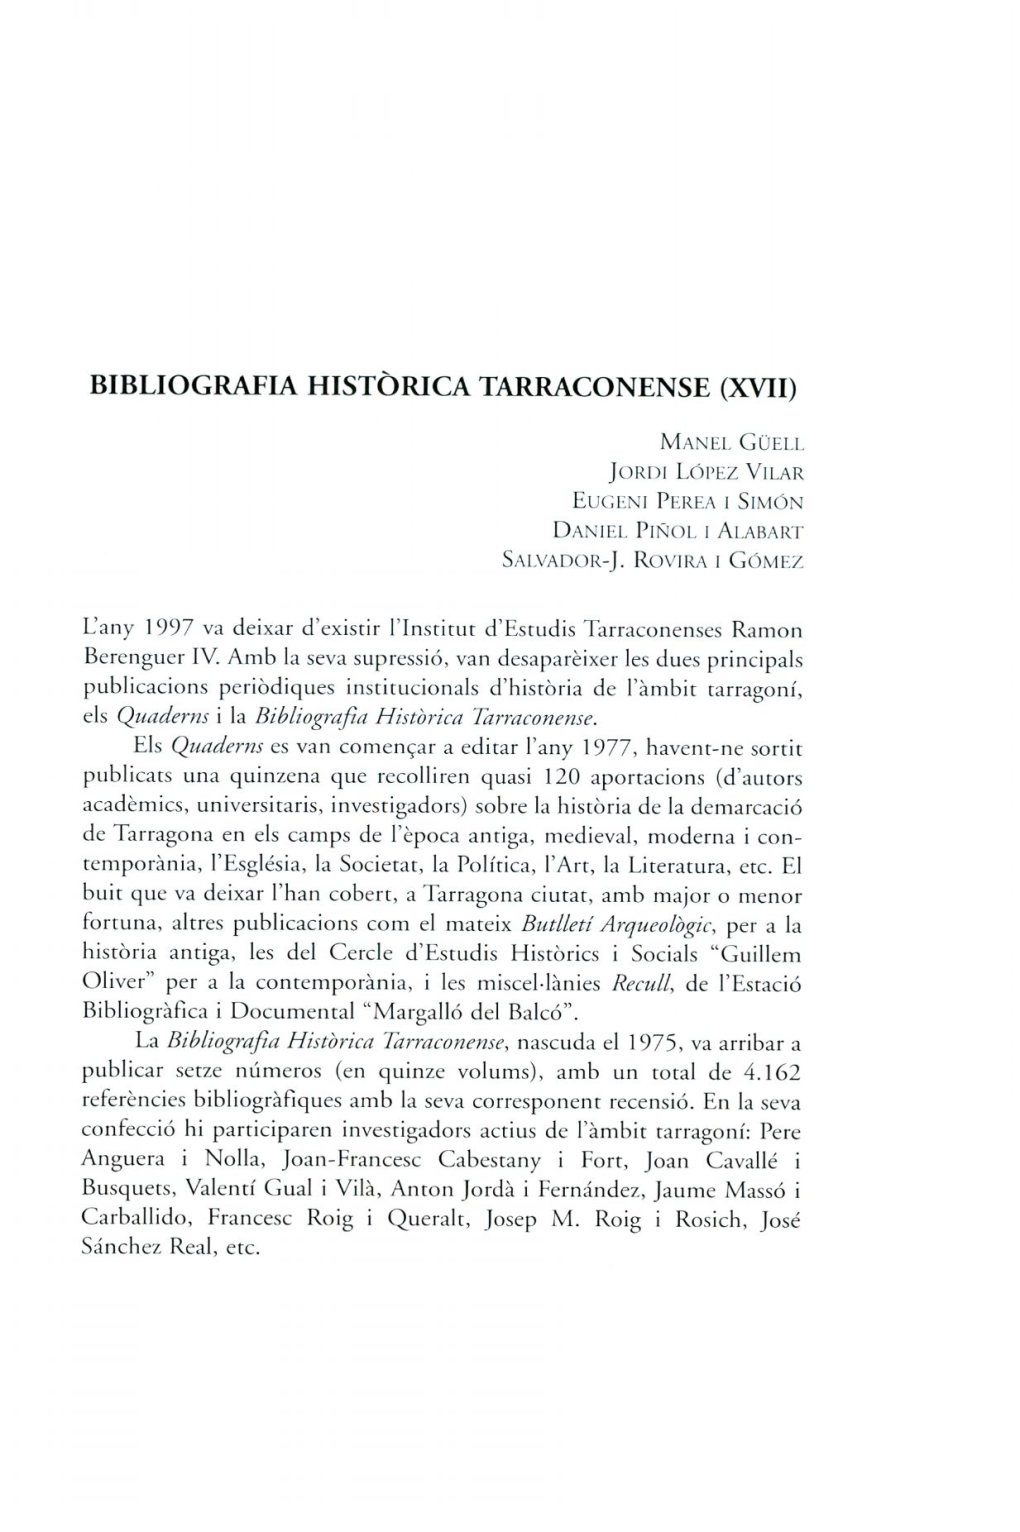 Bibliografia Histórica Tarraconense (Xvii)